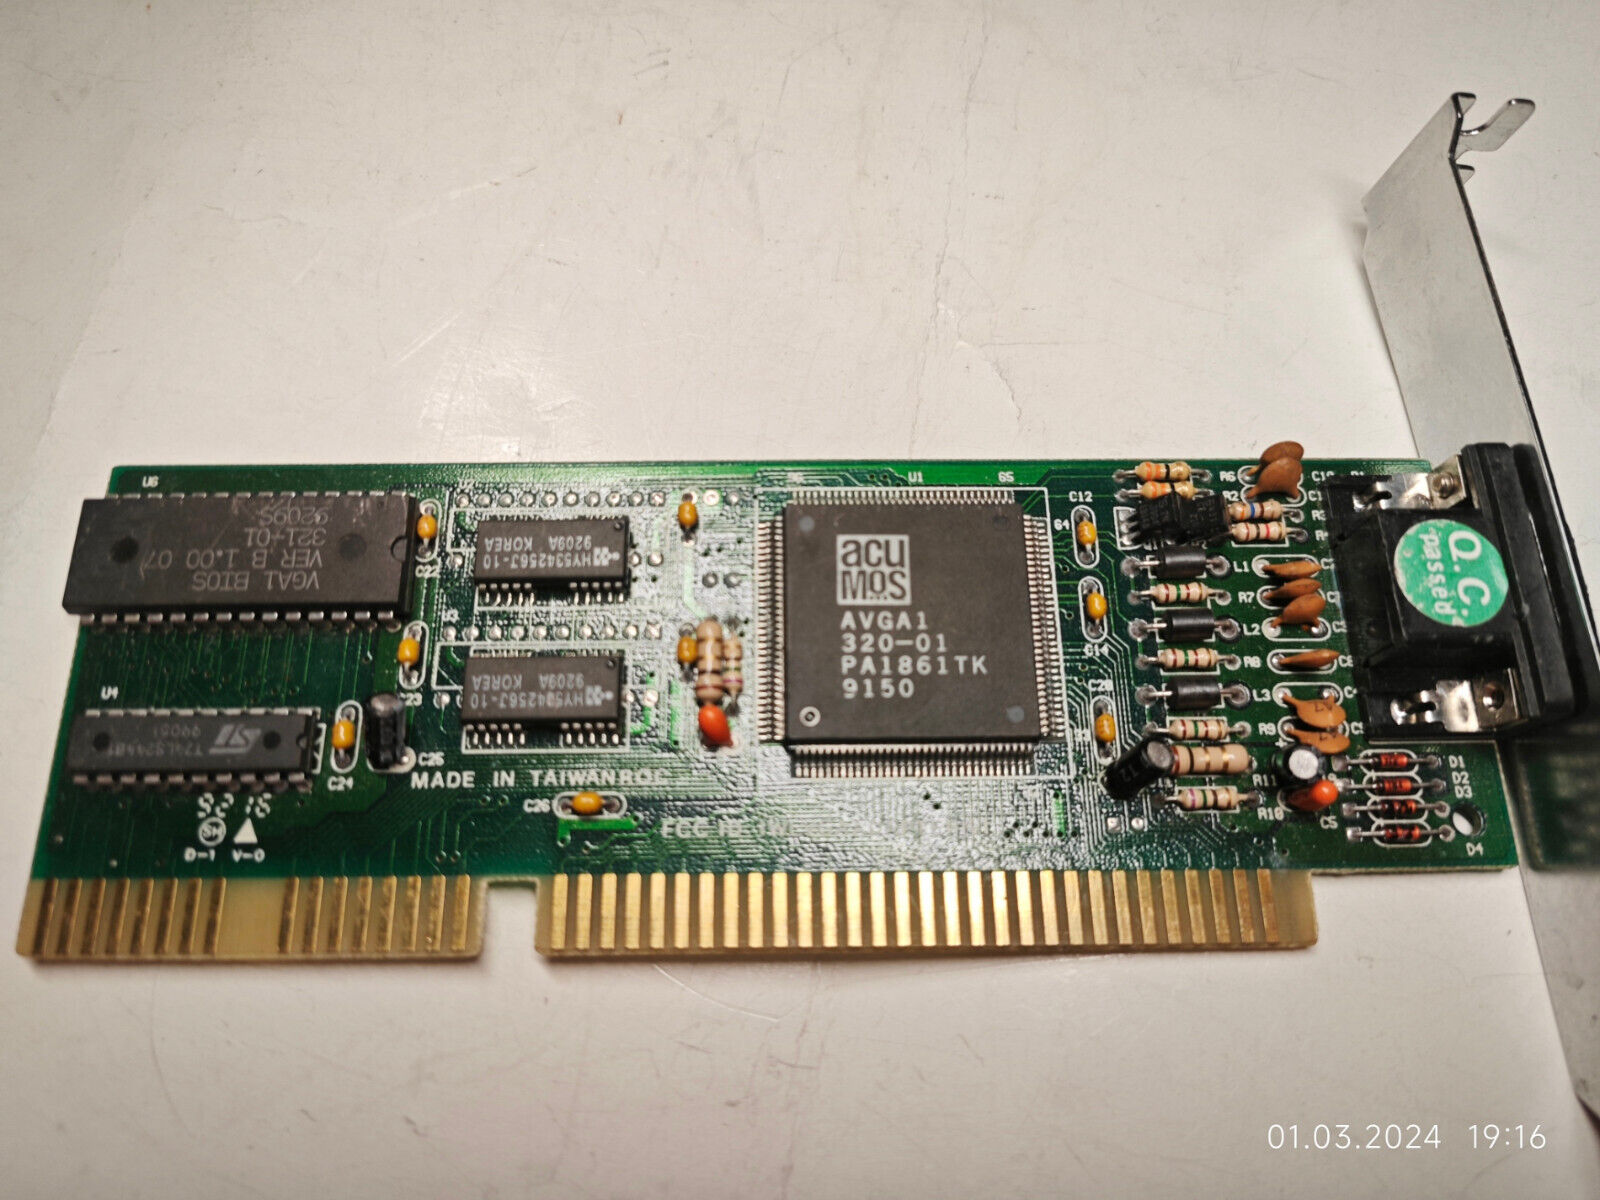 1992 ISA VGA CARD IWLVGAADAPTER1V1 AcuMOS AVGA1 320-01 512 KB DRAM 286 386 486